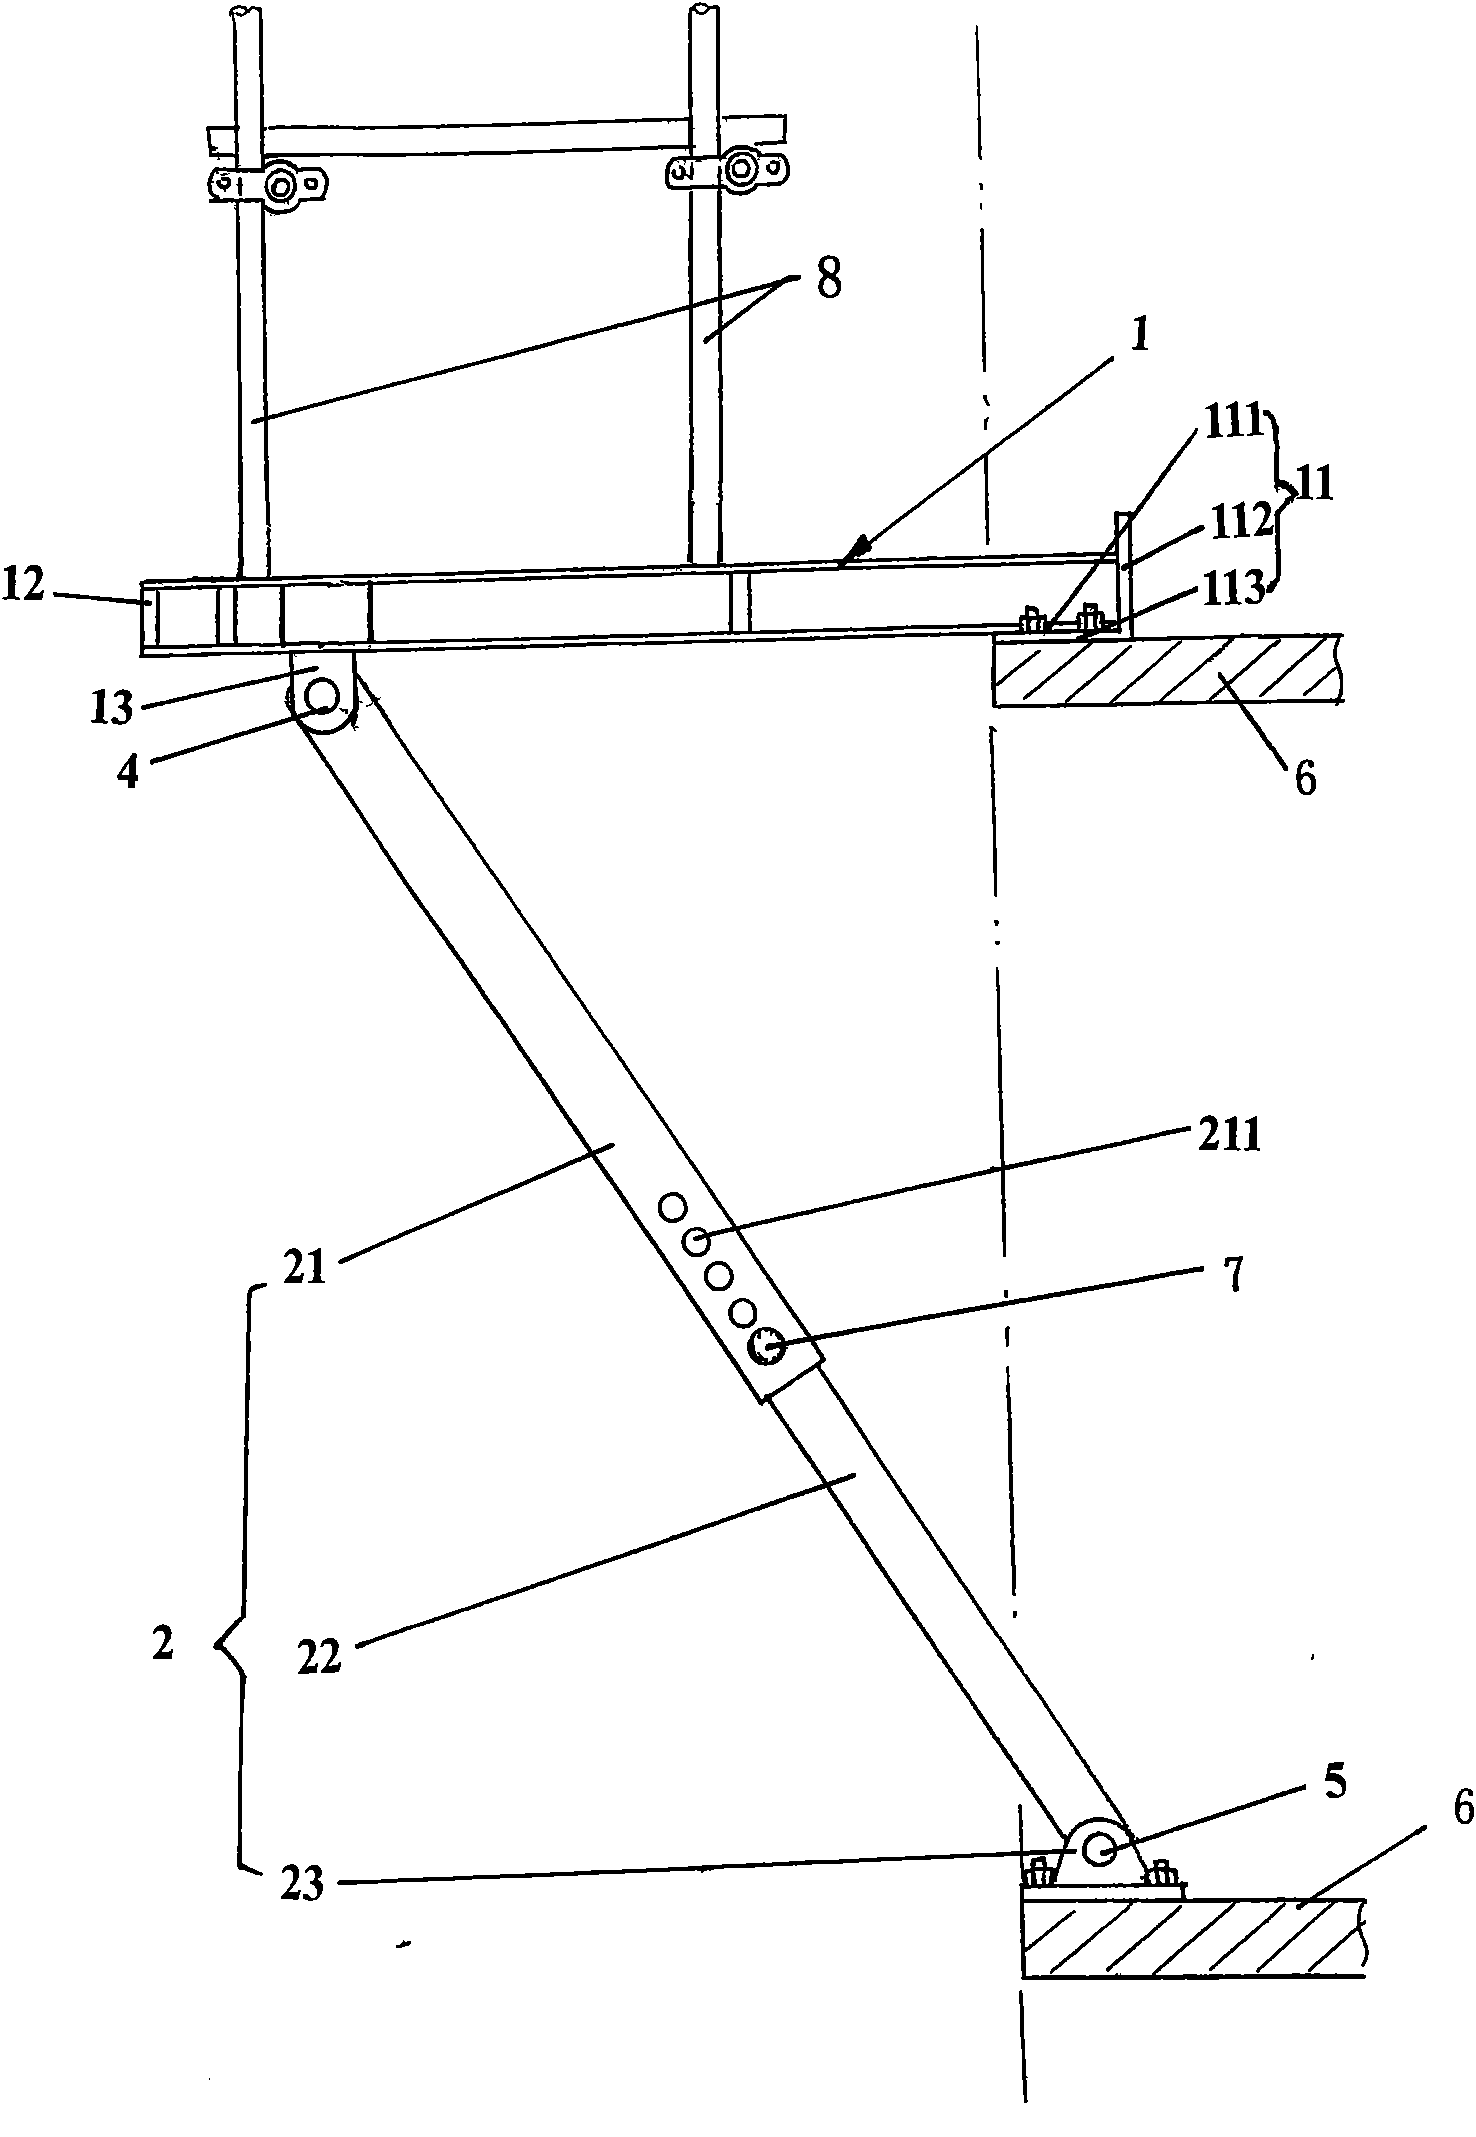 Support frame of adjustable suspension scaffold